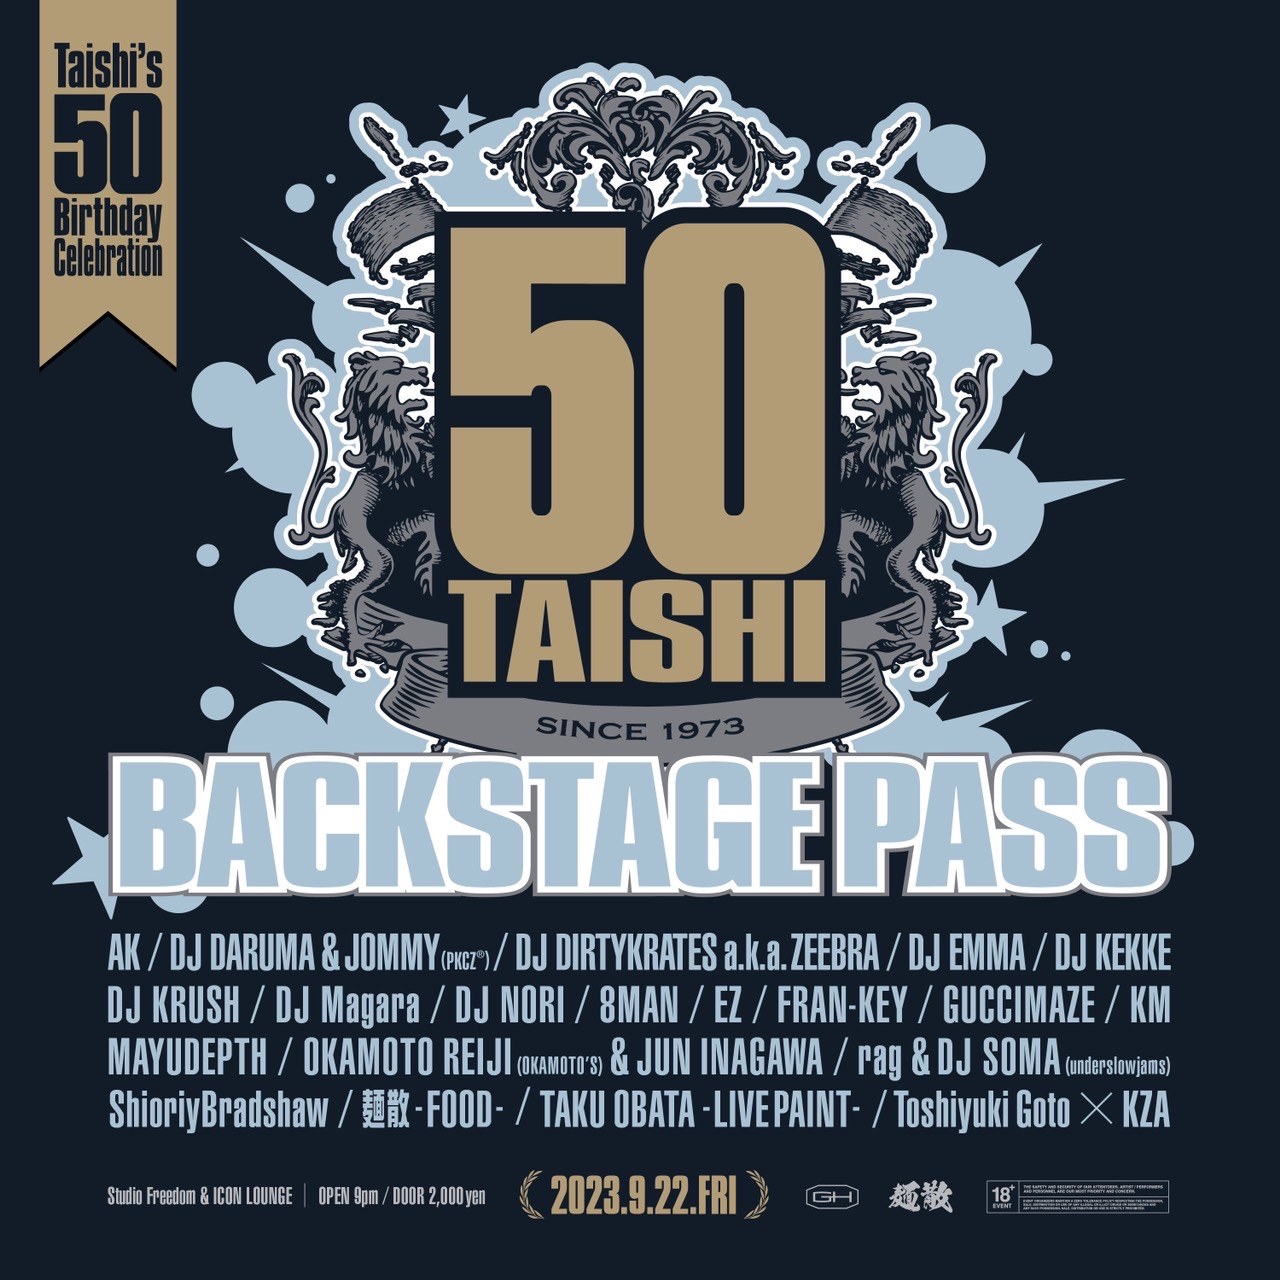 BACKSTAGE PASS Taishi’s 50th Birthday Celebration